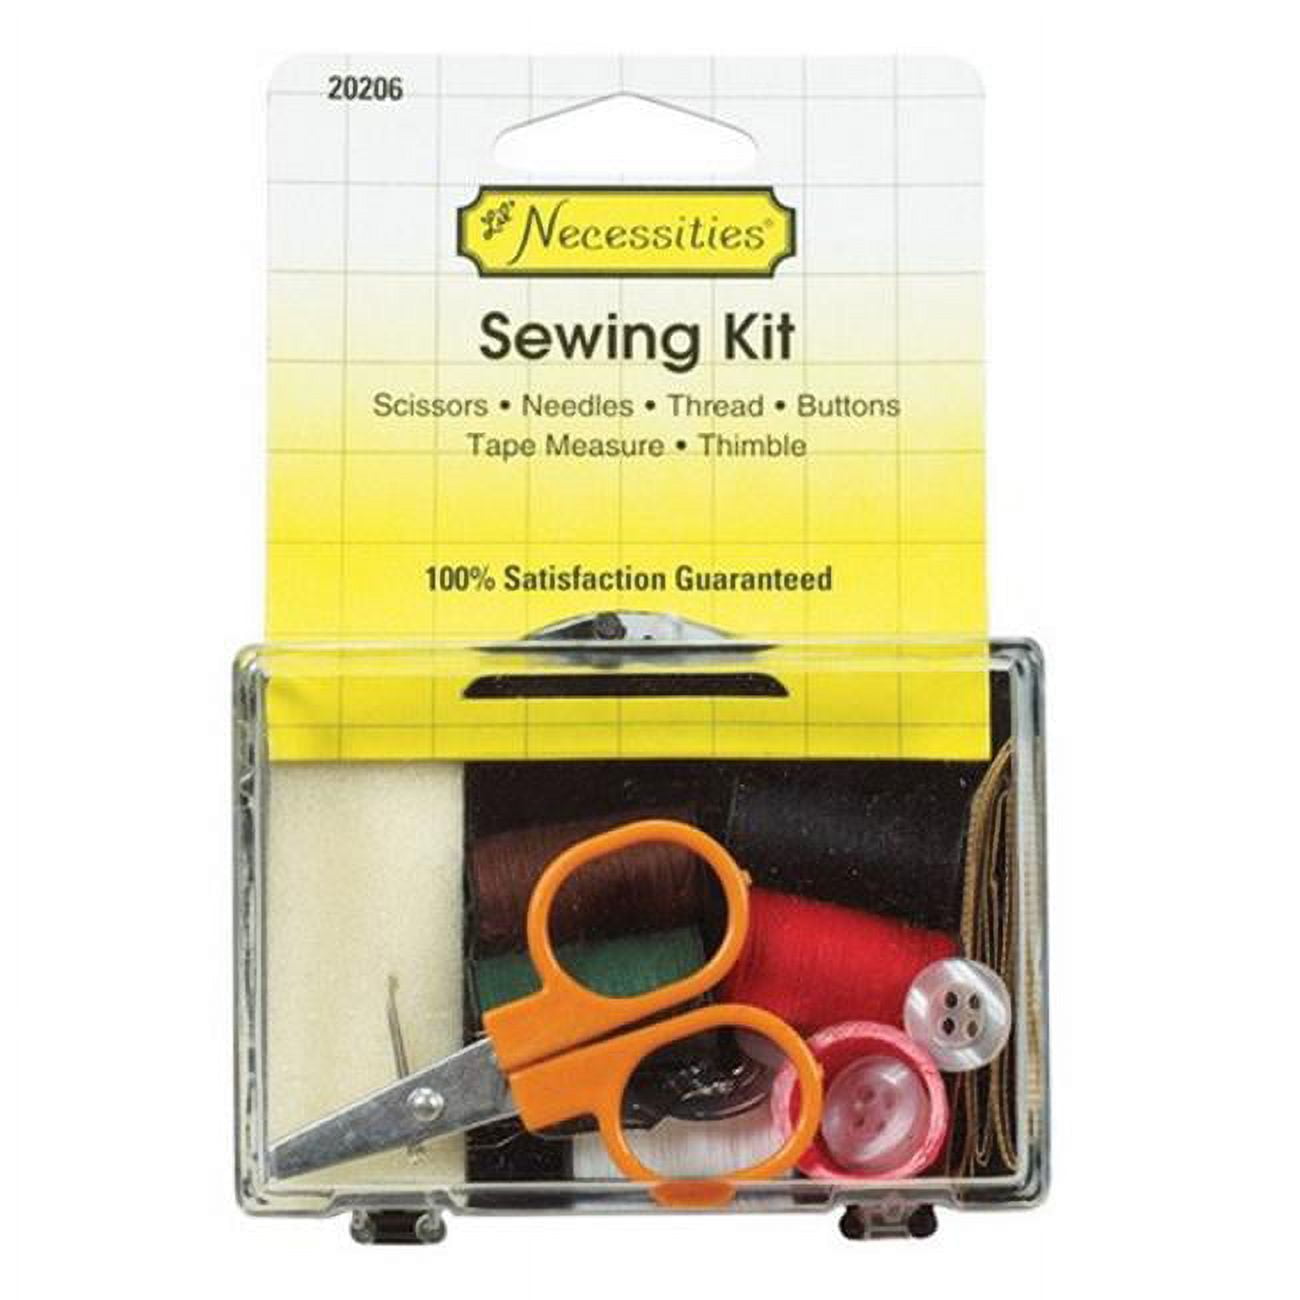 75 Custom Travel Sewing Kit